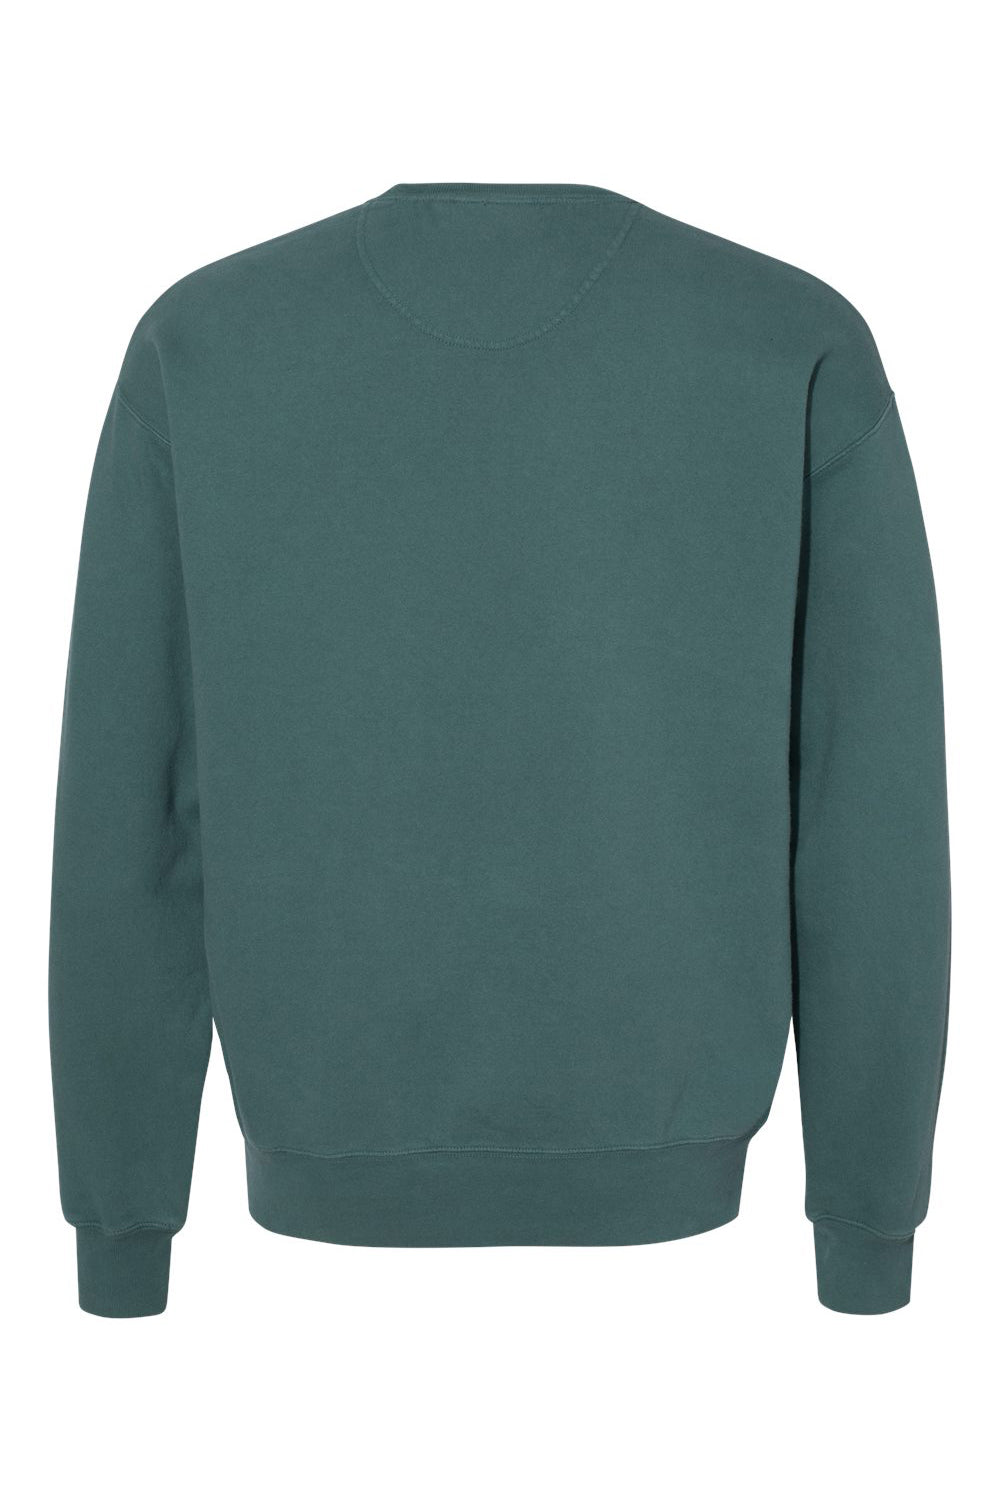 Champion CD400 Mens Garment Dyed Crewneck Sweatshirt Cactus Green Flat Back